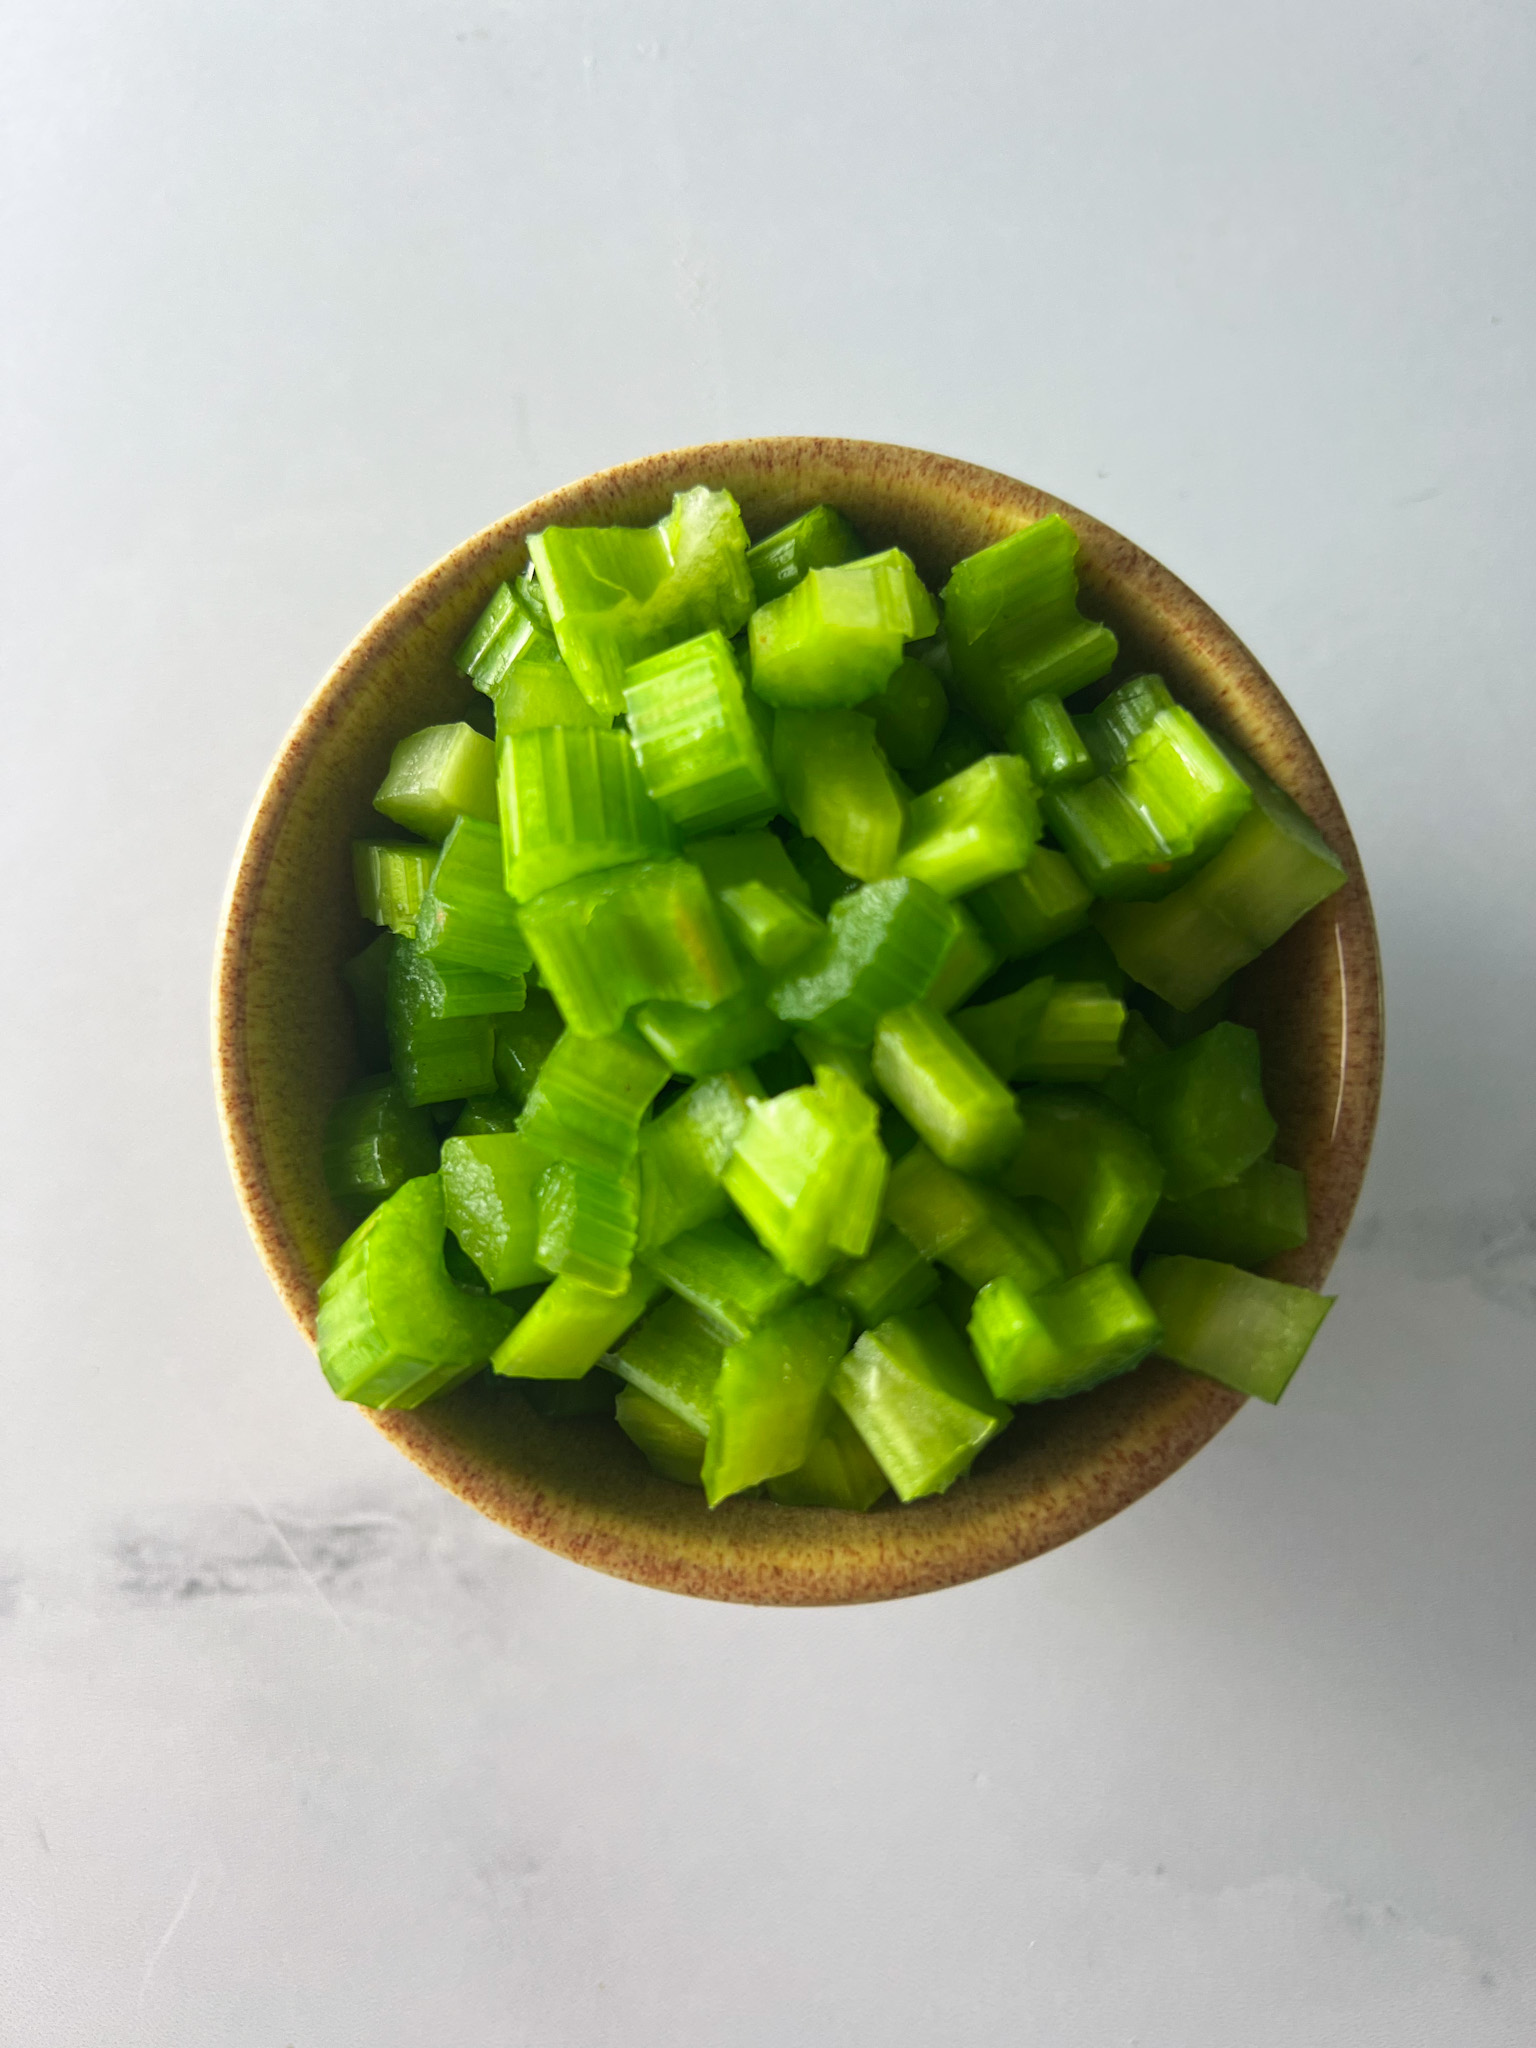 chopped celery in a bowl